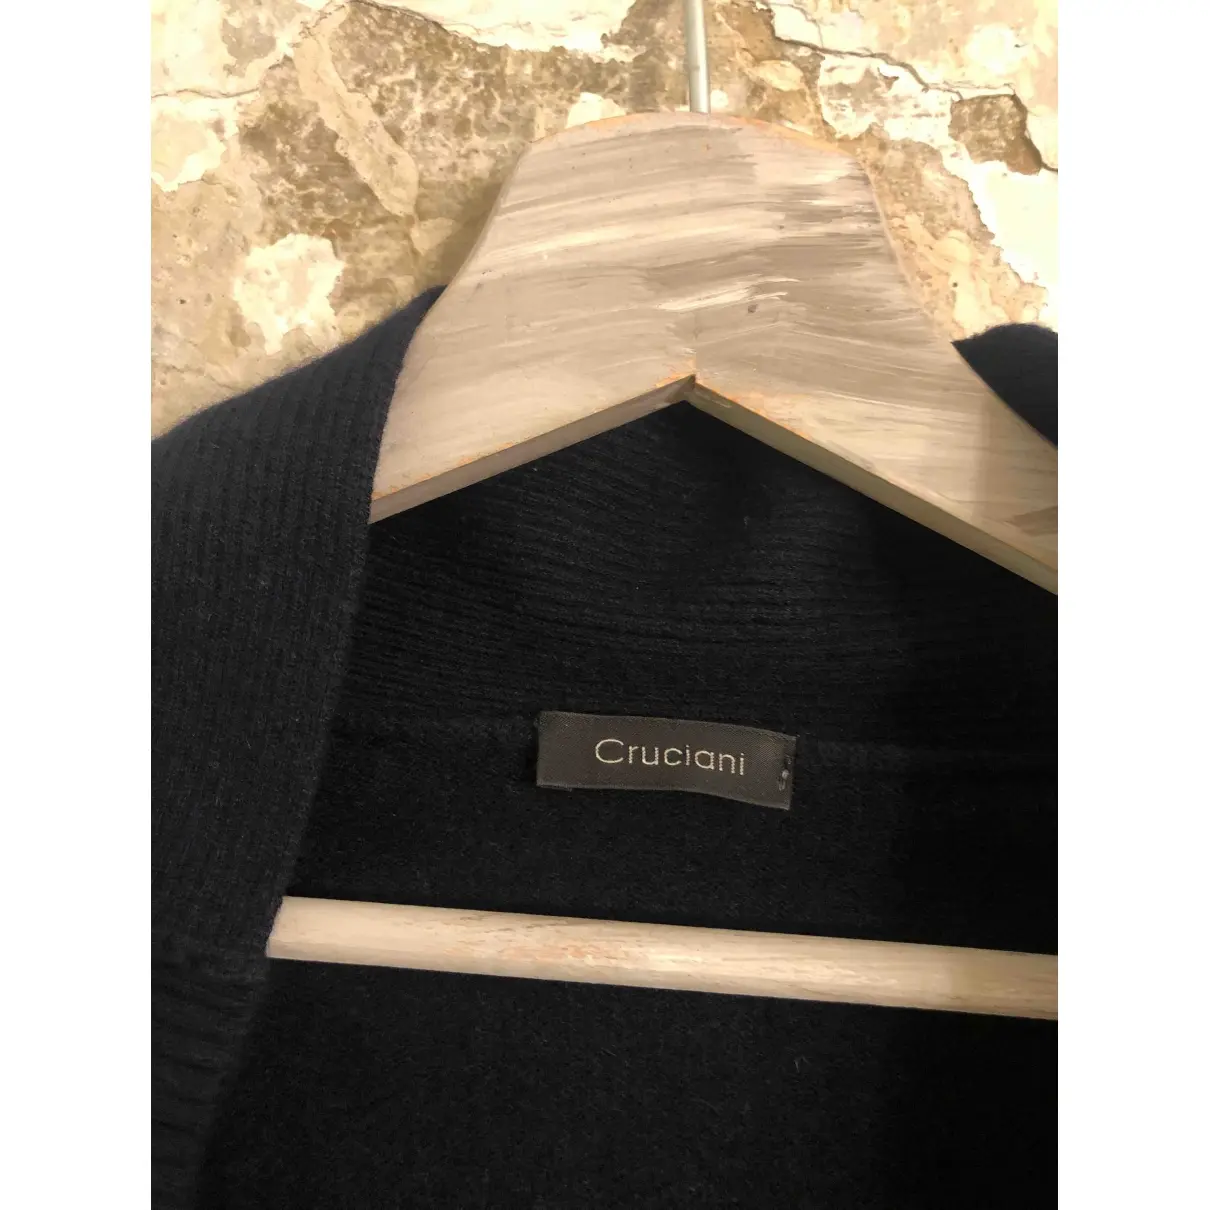 Cruciani Cashmere cardigan for sale